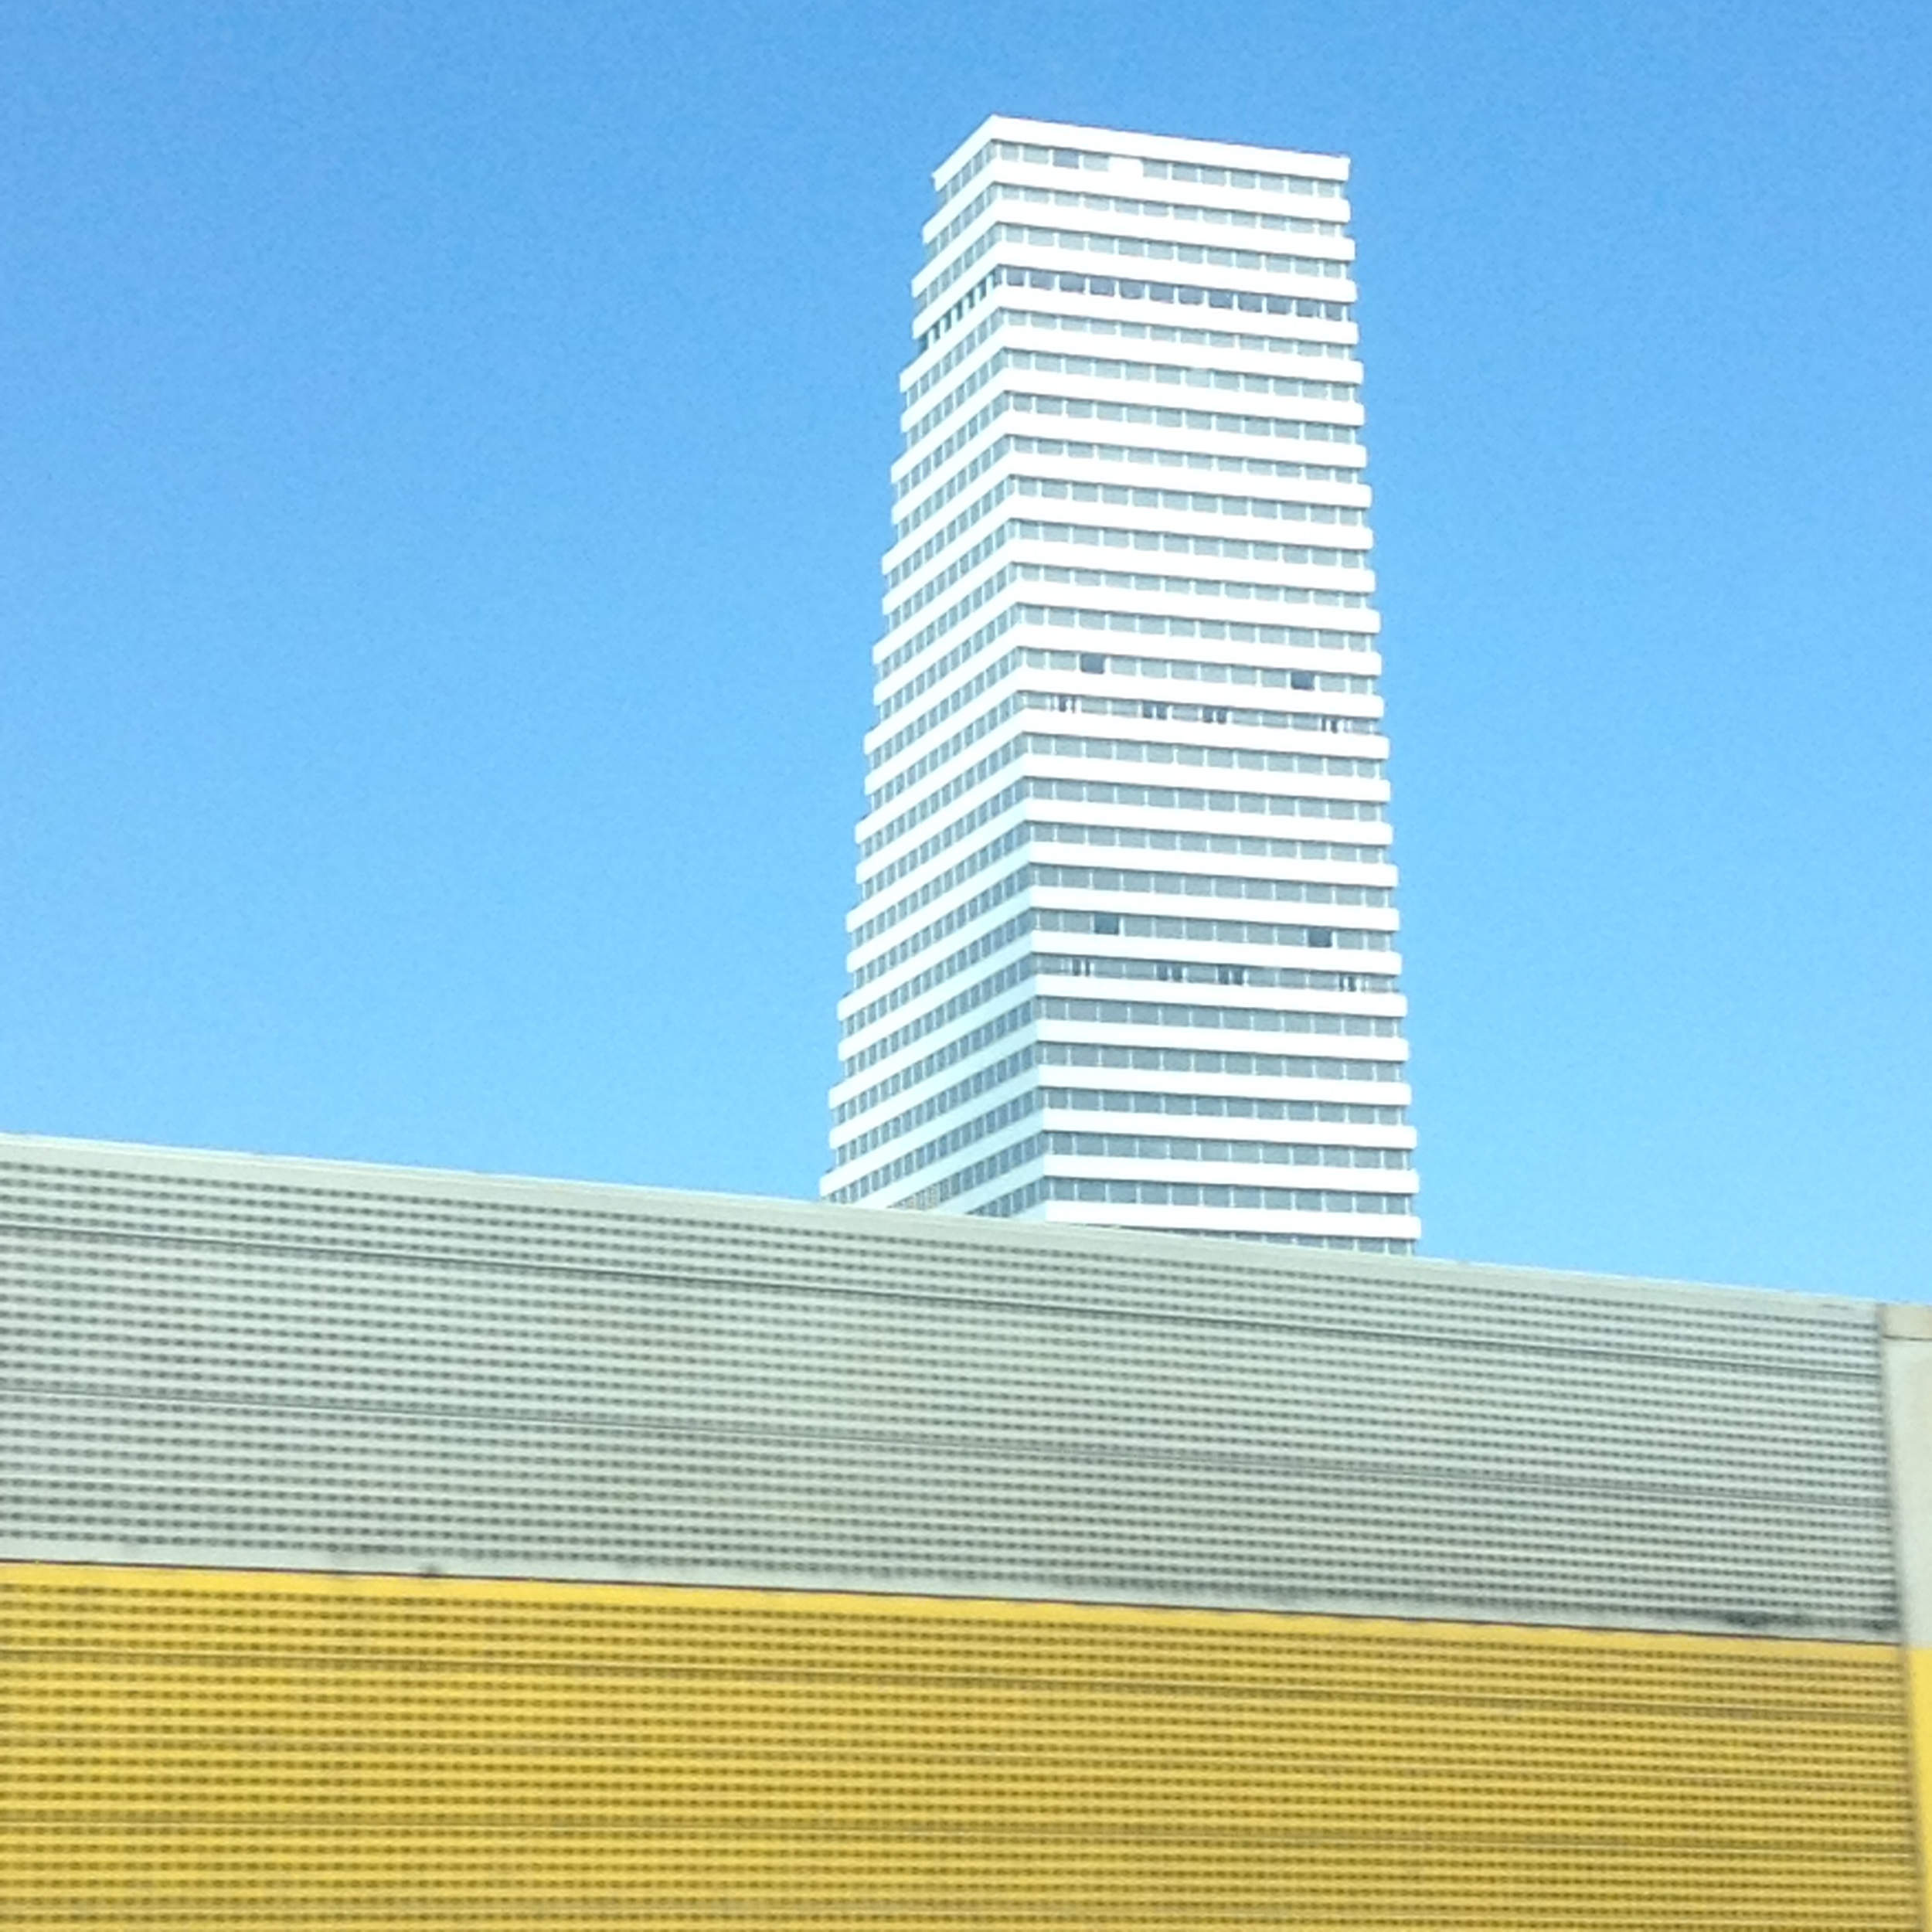 Roche Tower, Basel/ 2014